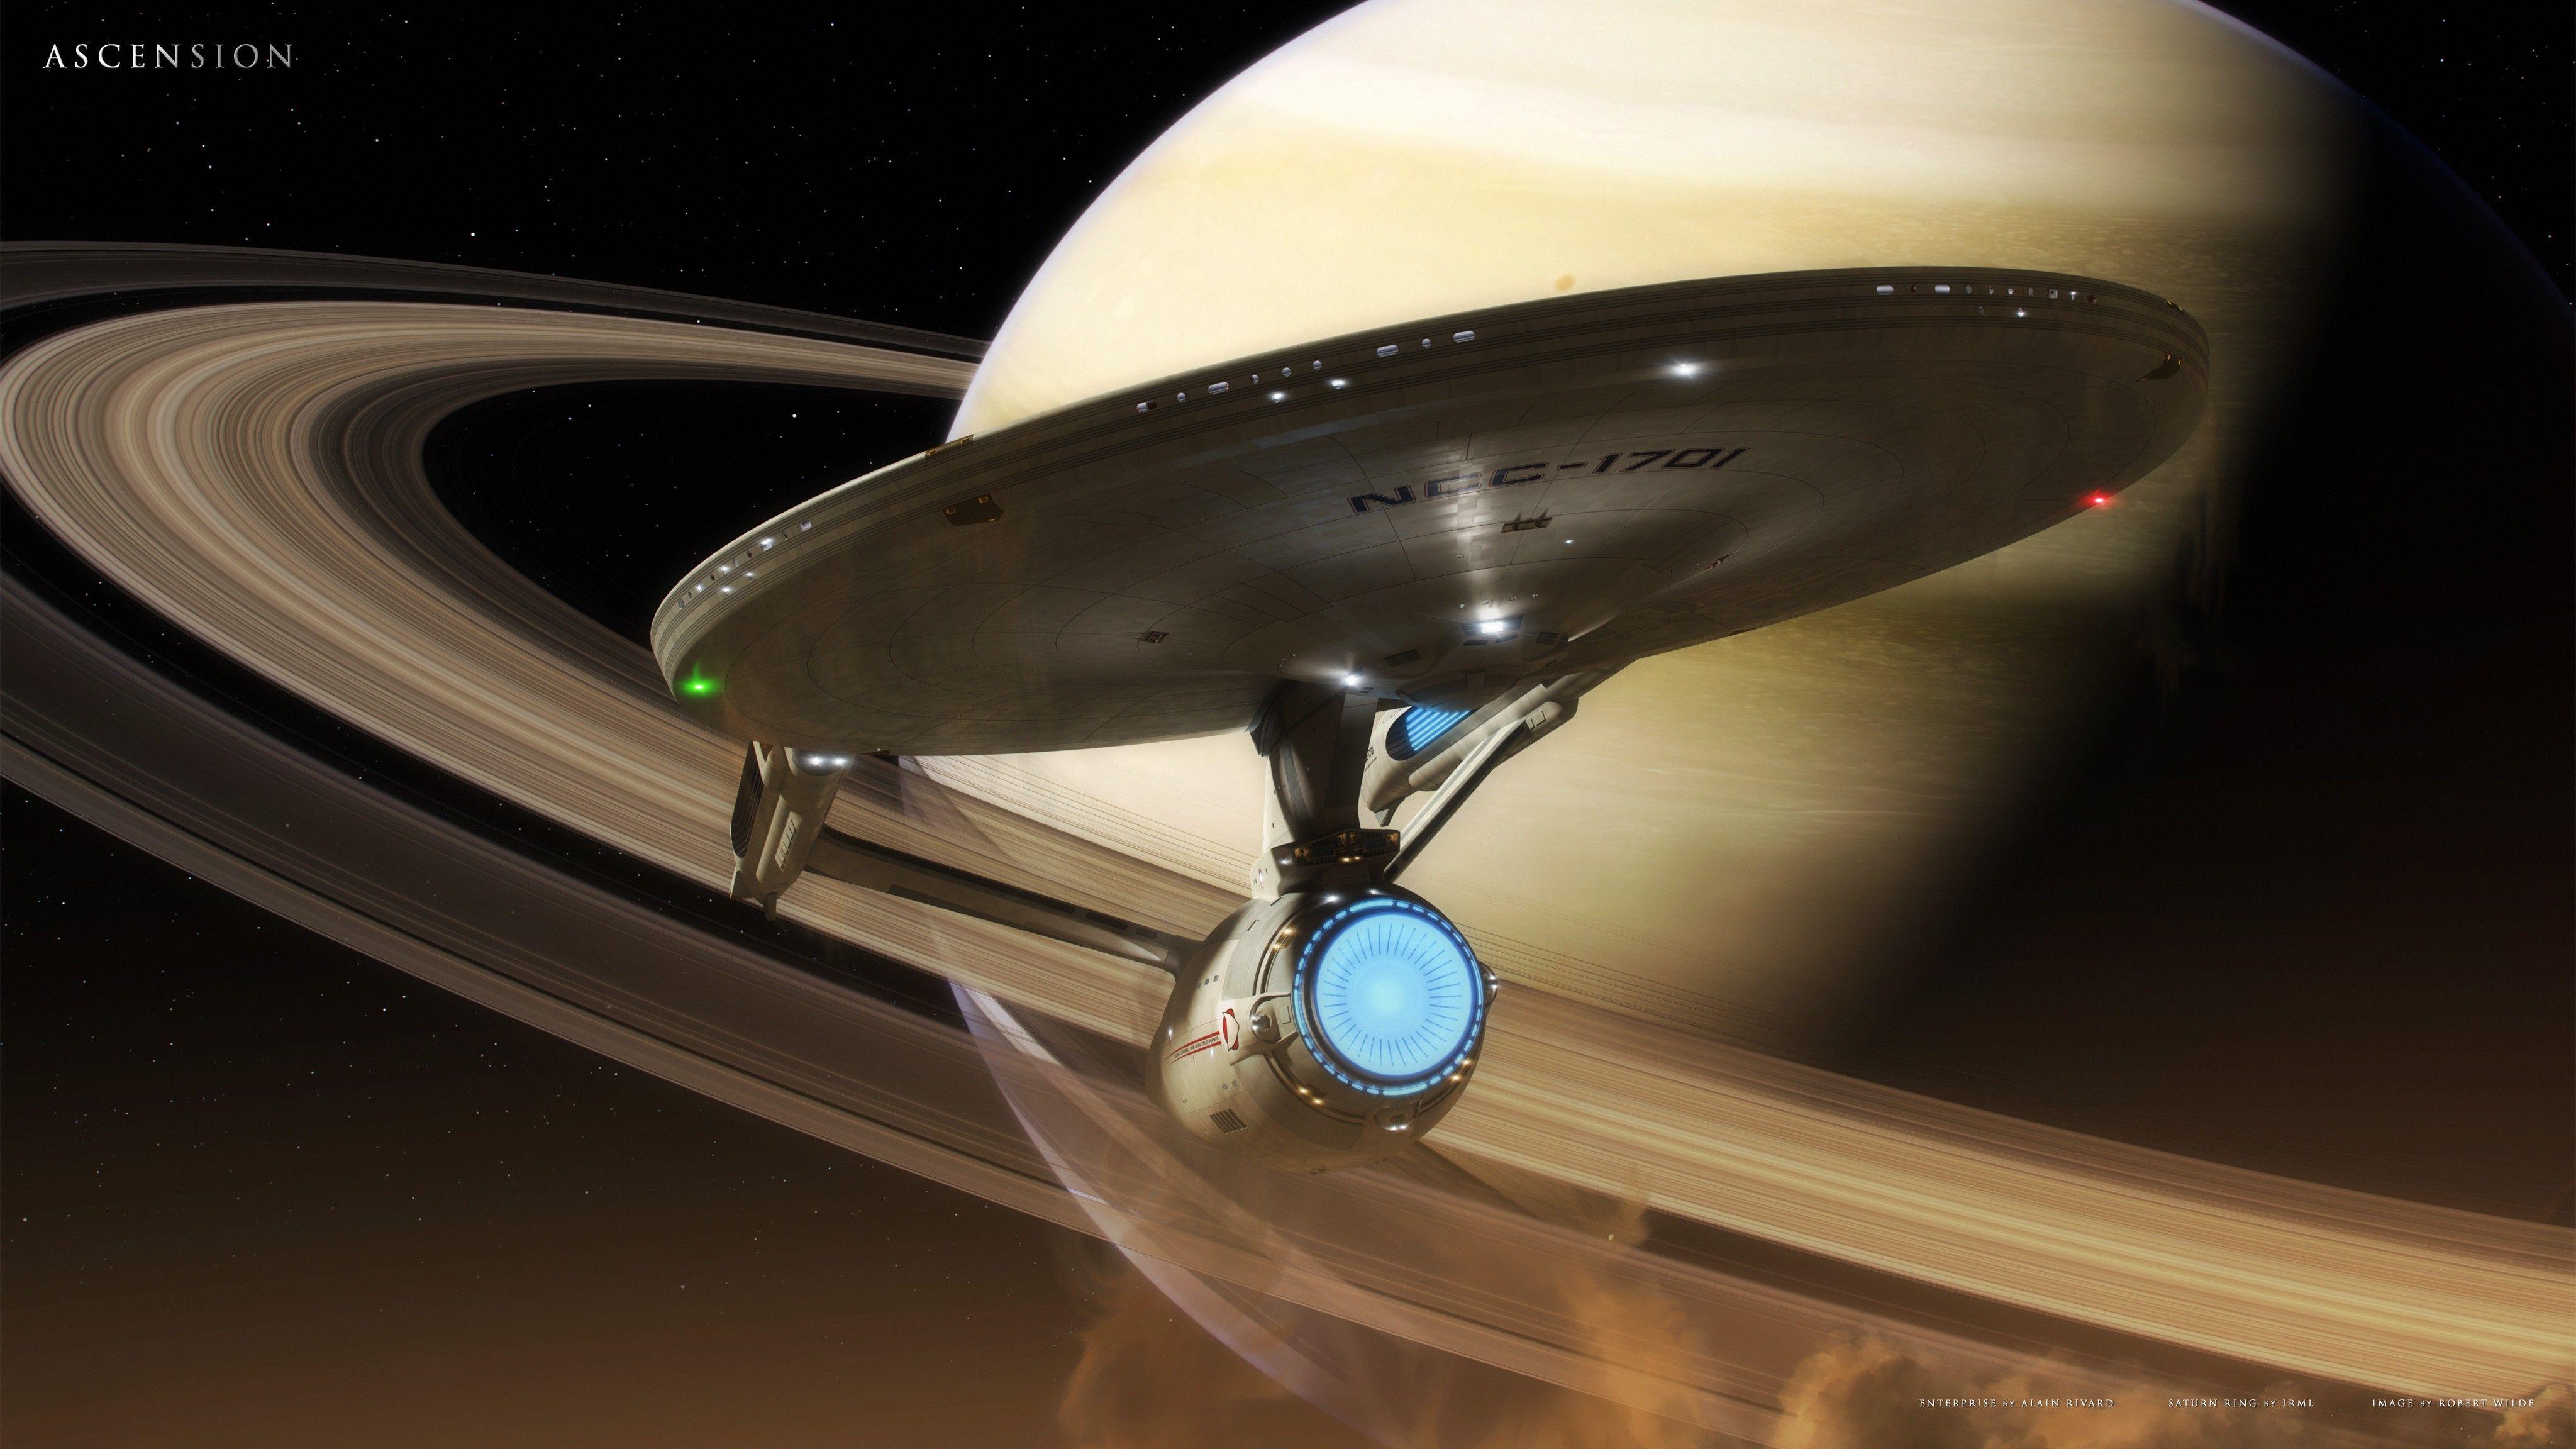 Star Trek HD Wallpaper and Background Image